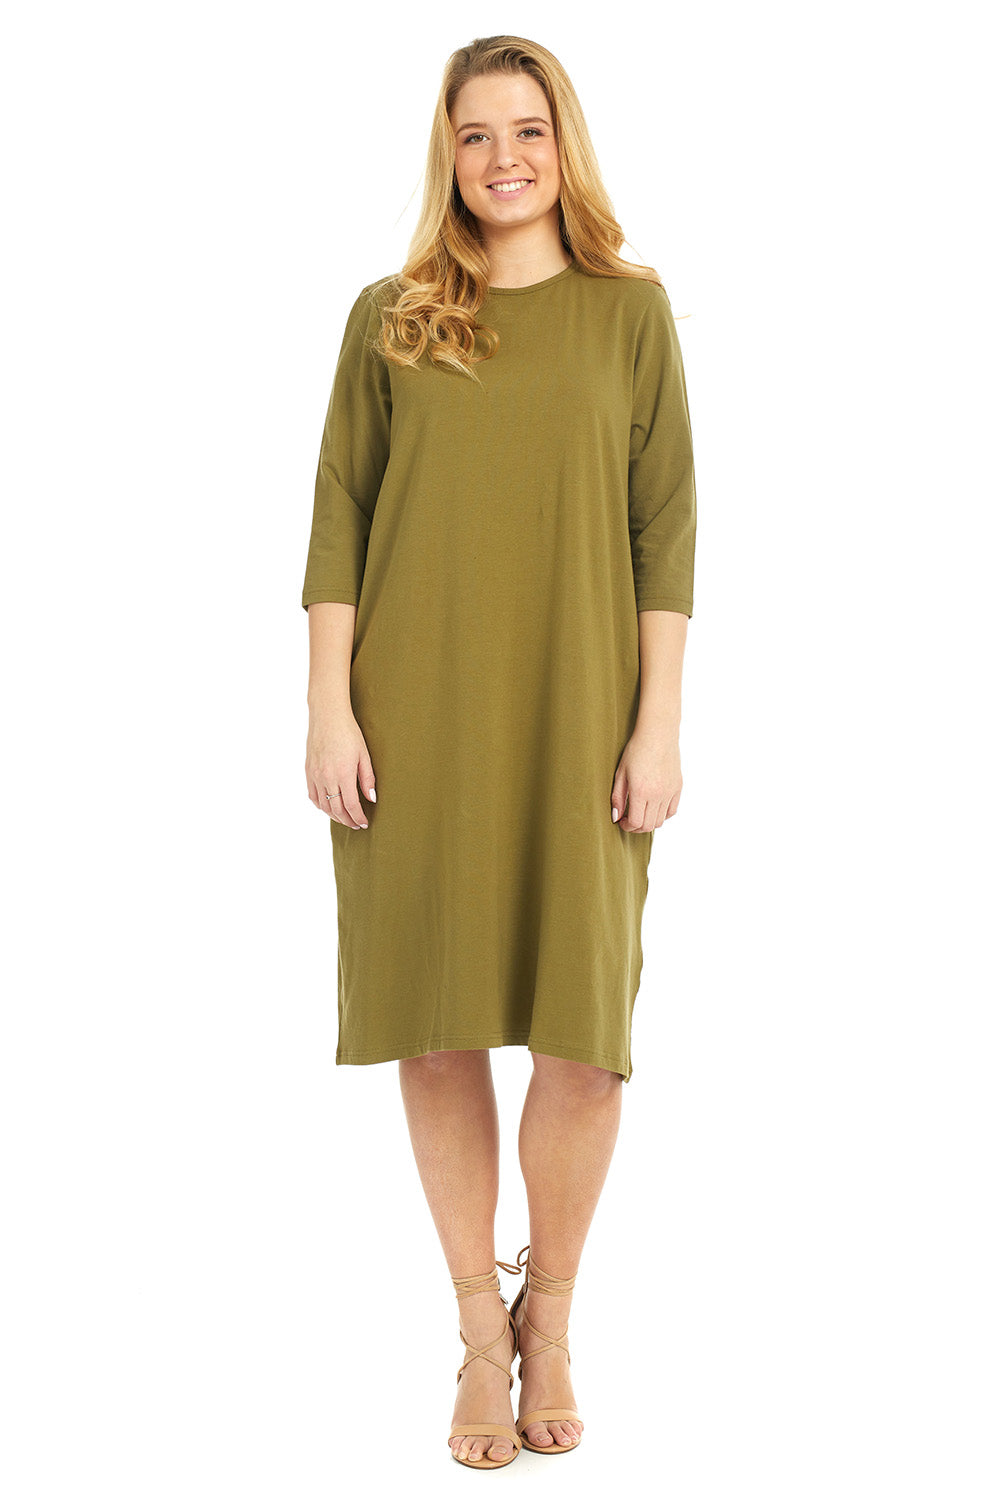 Esteez TEE Dress - Women's Cotton Spandex Casual Shift Dress - 3/4 Sleeves - OLIVE